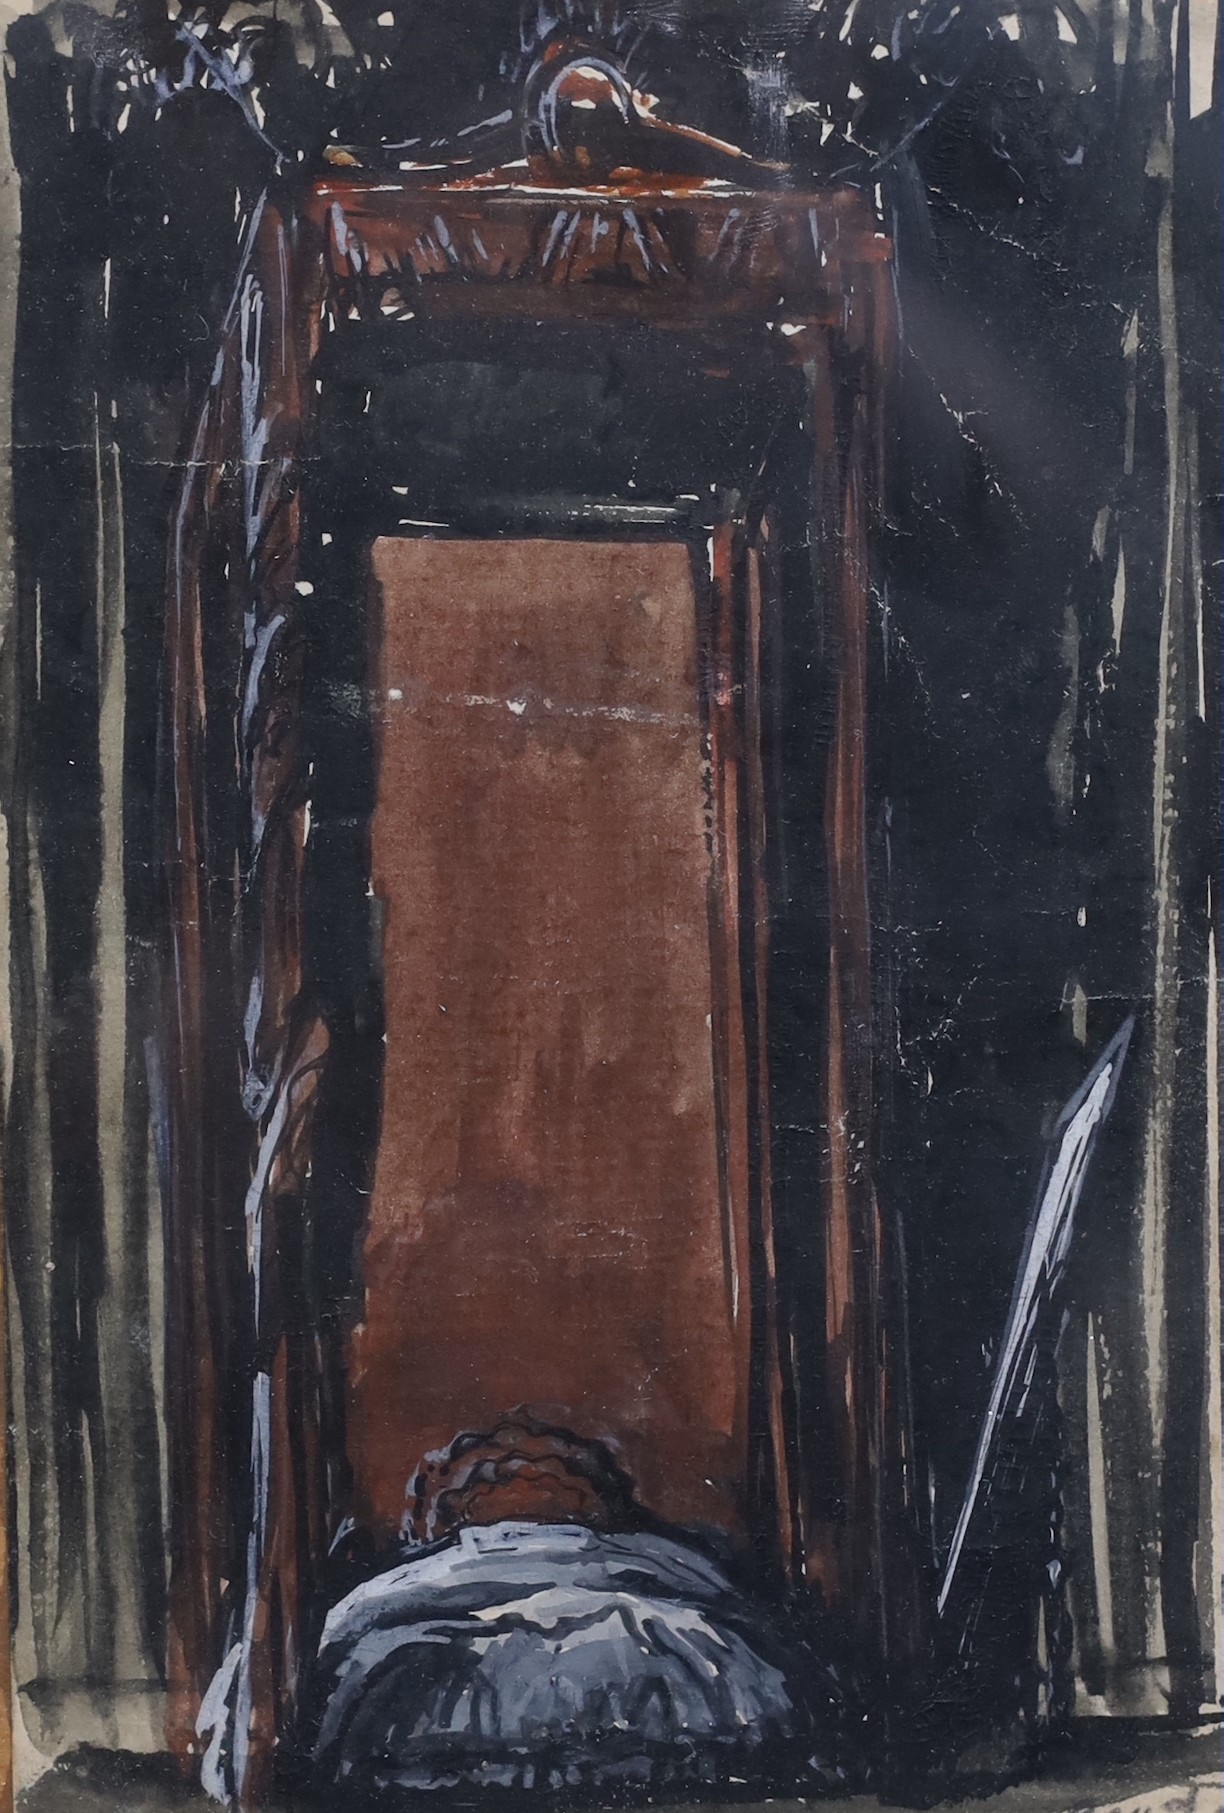 James Ferrier Pryde (Scottish, 1866-1941), 'The Bed', gouache on paper, 14 x 10cm                                                                                                                                           